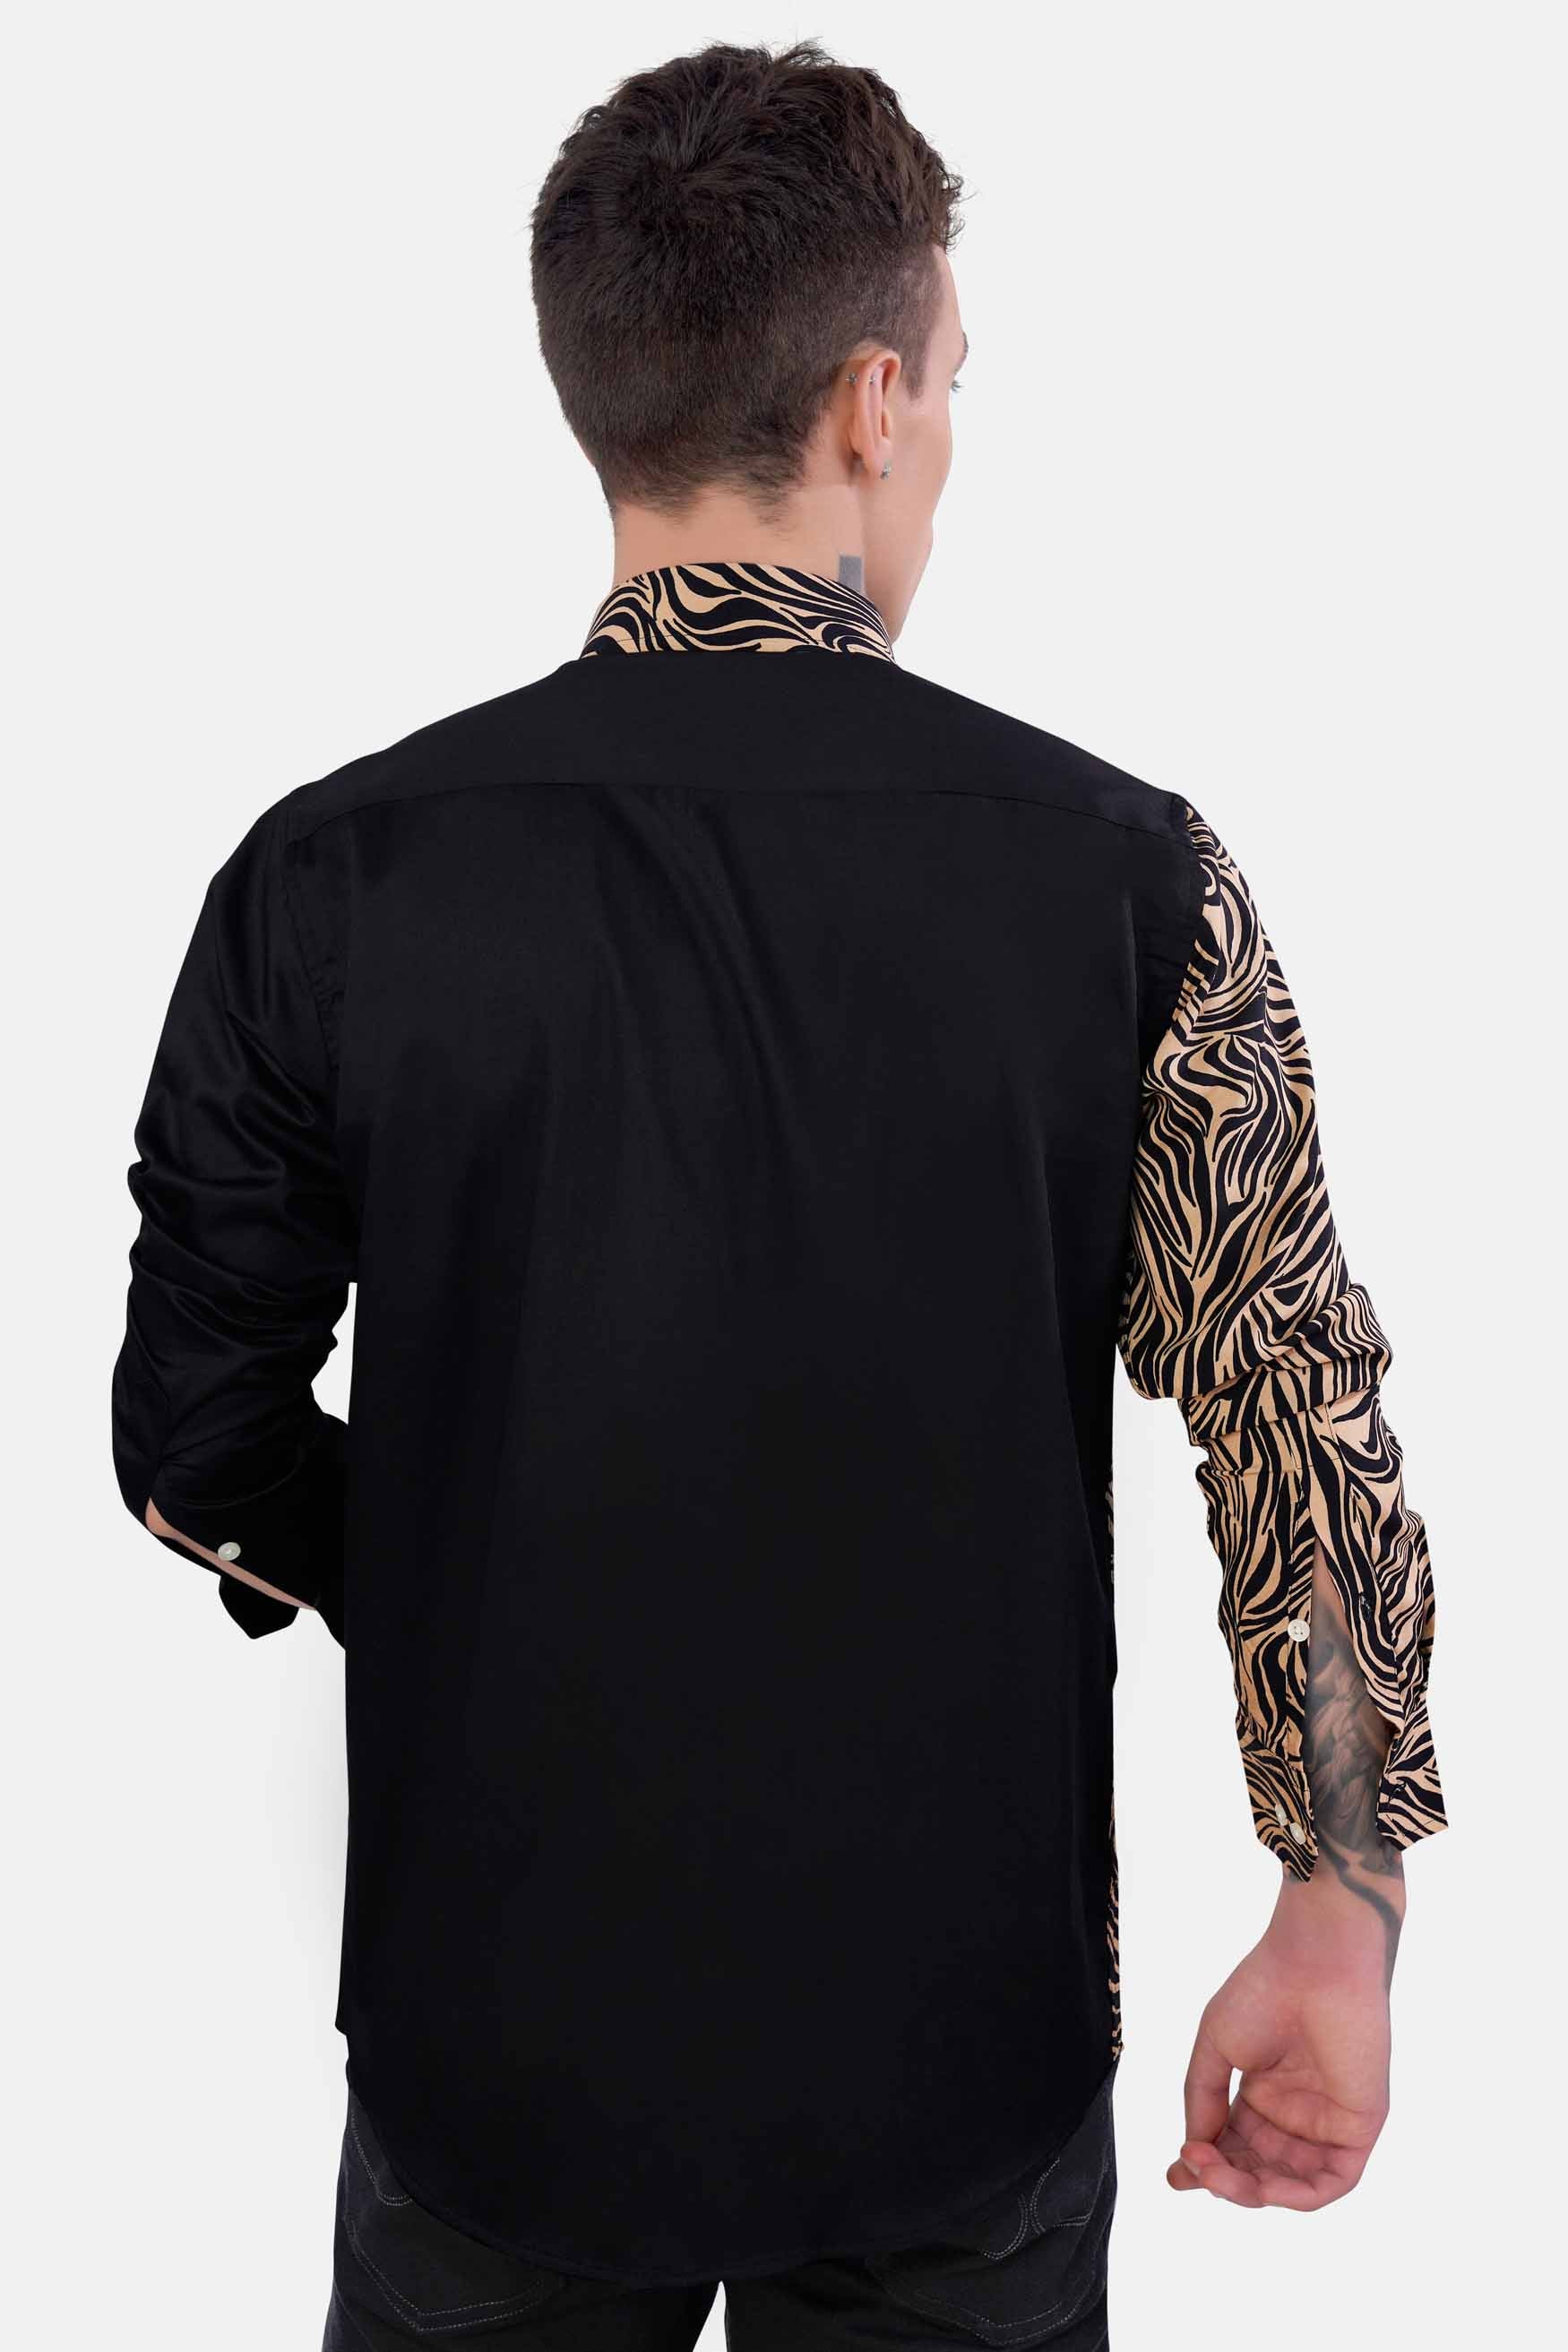 Half Animal Printed and Half Solid Black Premium Tencel Designer Shirt